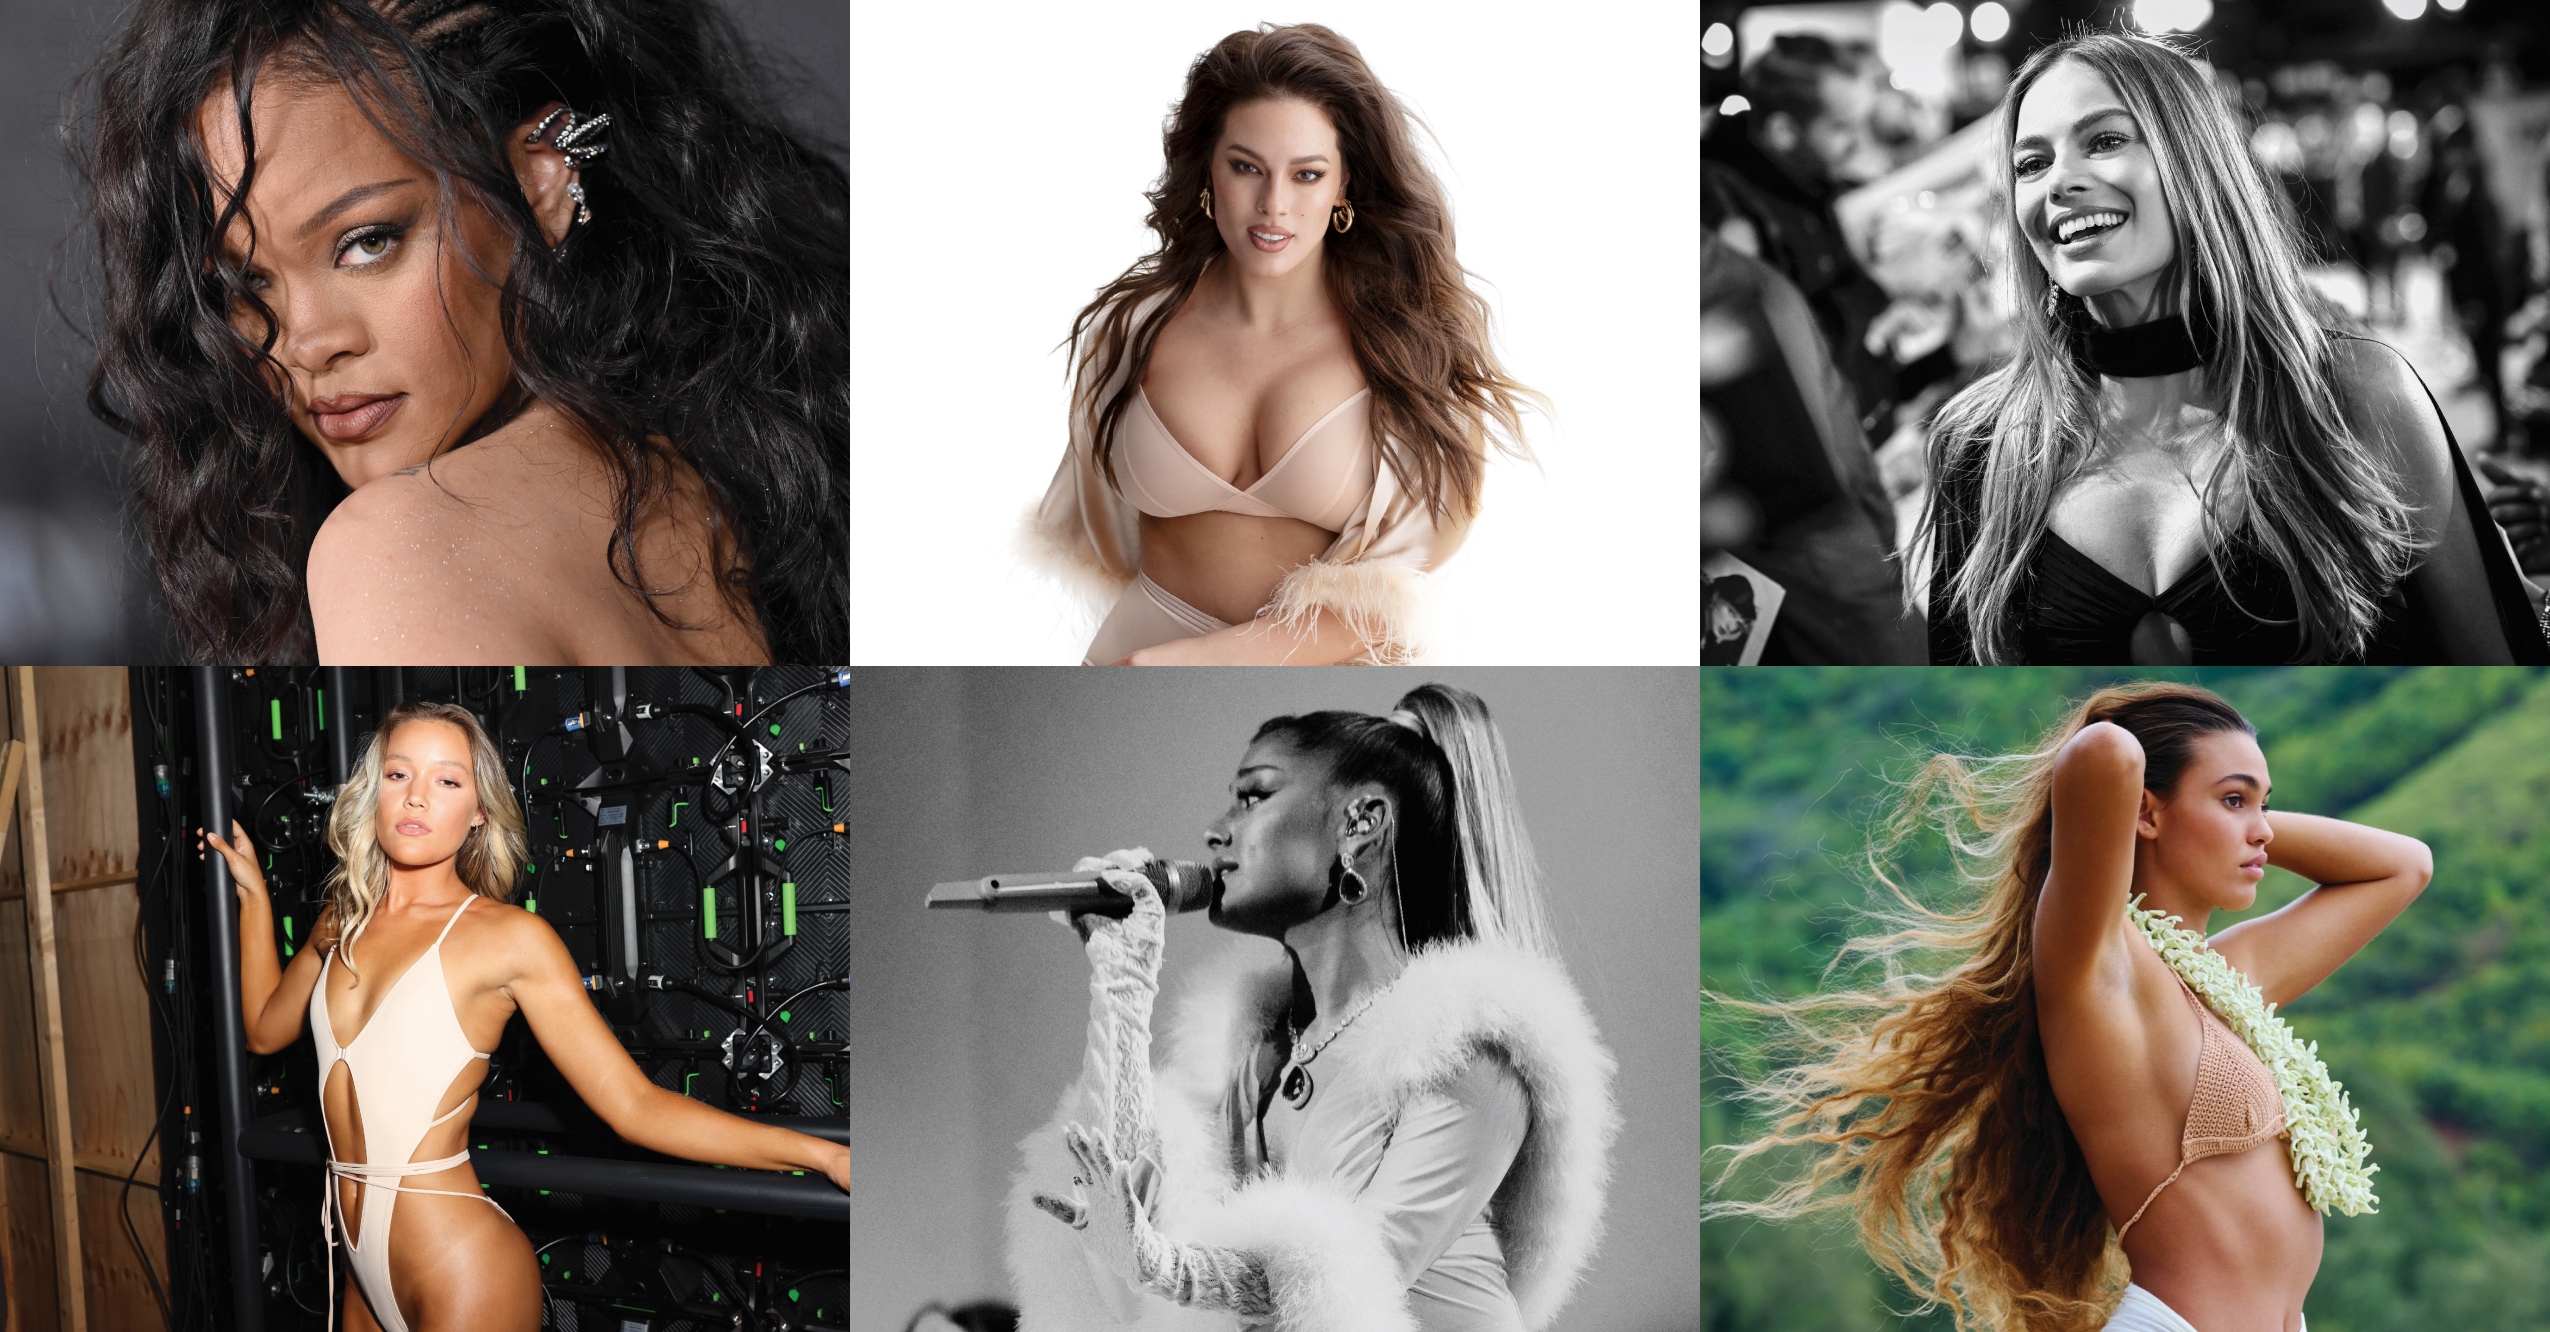 Free Xxx Porn Video Of Anal Sex Of Rita Ora - Meet The Women Of The 2023 Maxim Hot 100 - Maxim